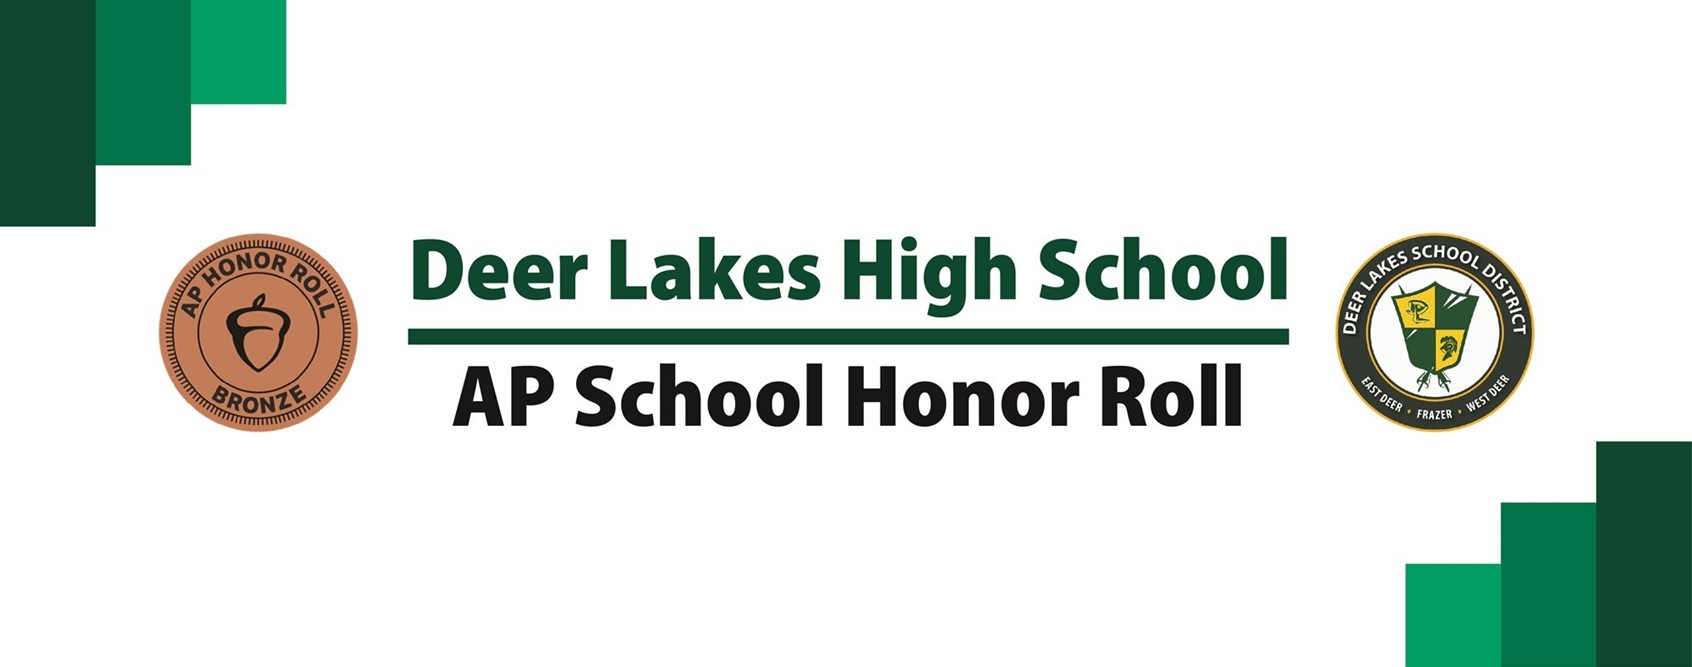 Deer Lakes High School earns AP Honor Roll Bronze Award